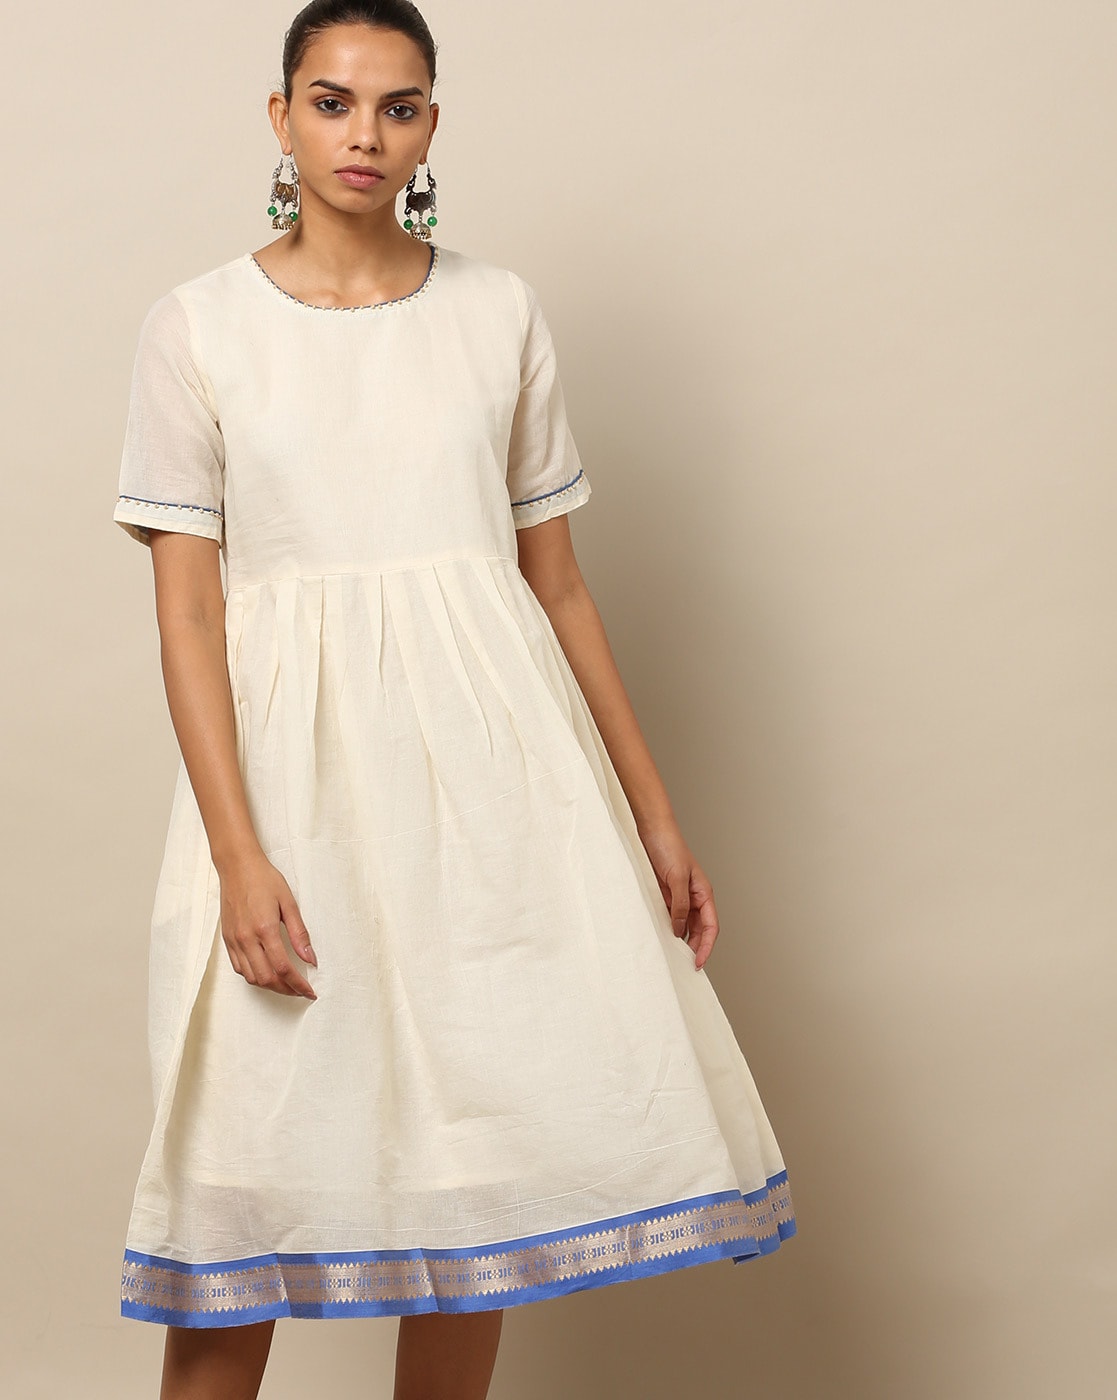 Girl Onam Dress: Over 130 Royalty-Free Licensable Stock Illustrations &  Drawings | Shutterstock